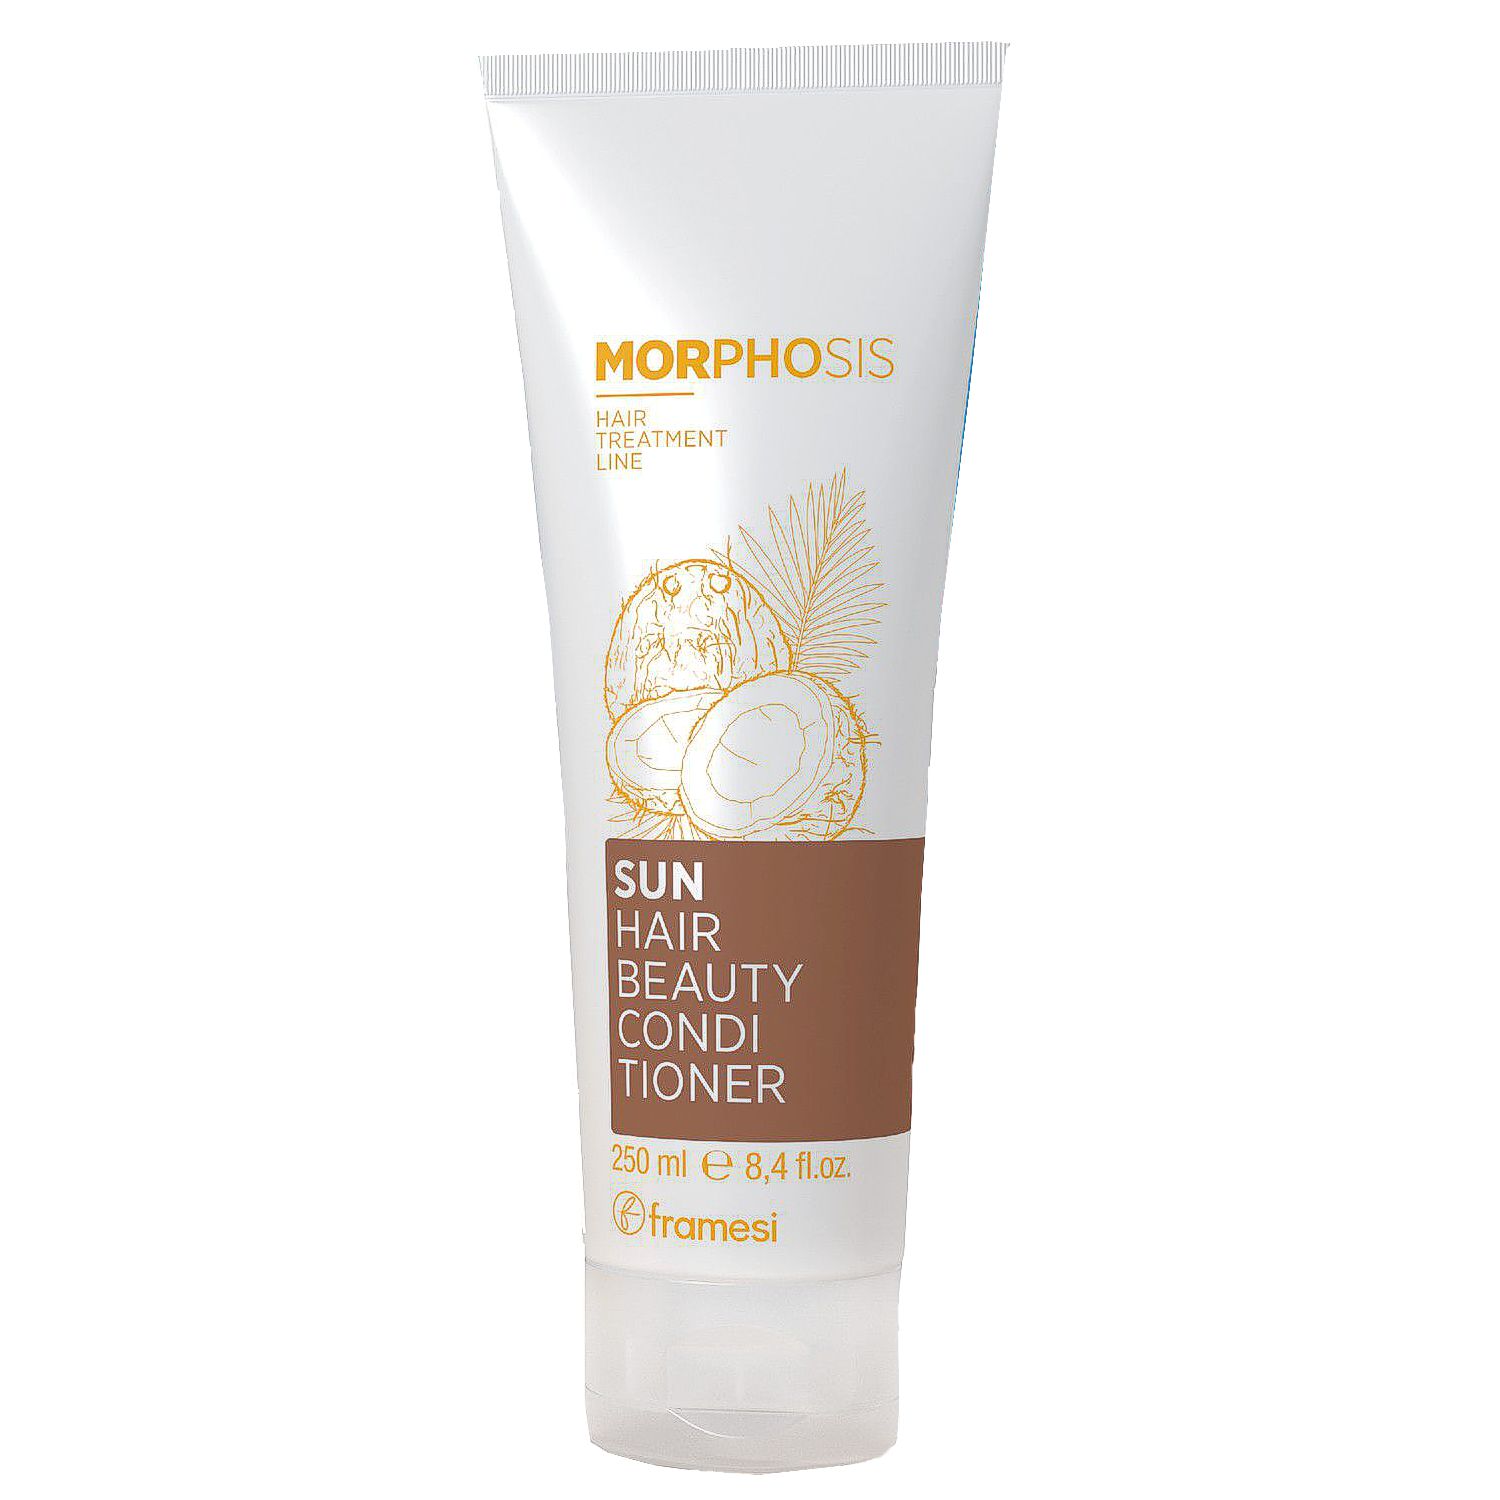 Framesi MORPHOSIS Sun Hair Beauty Conditioner 250 ml